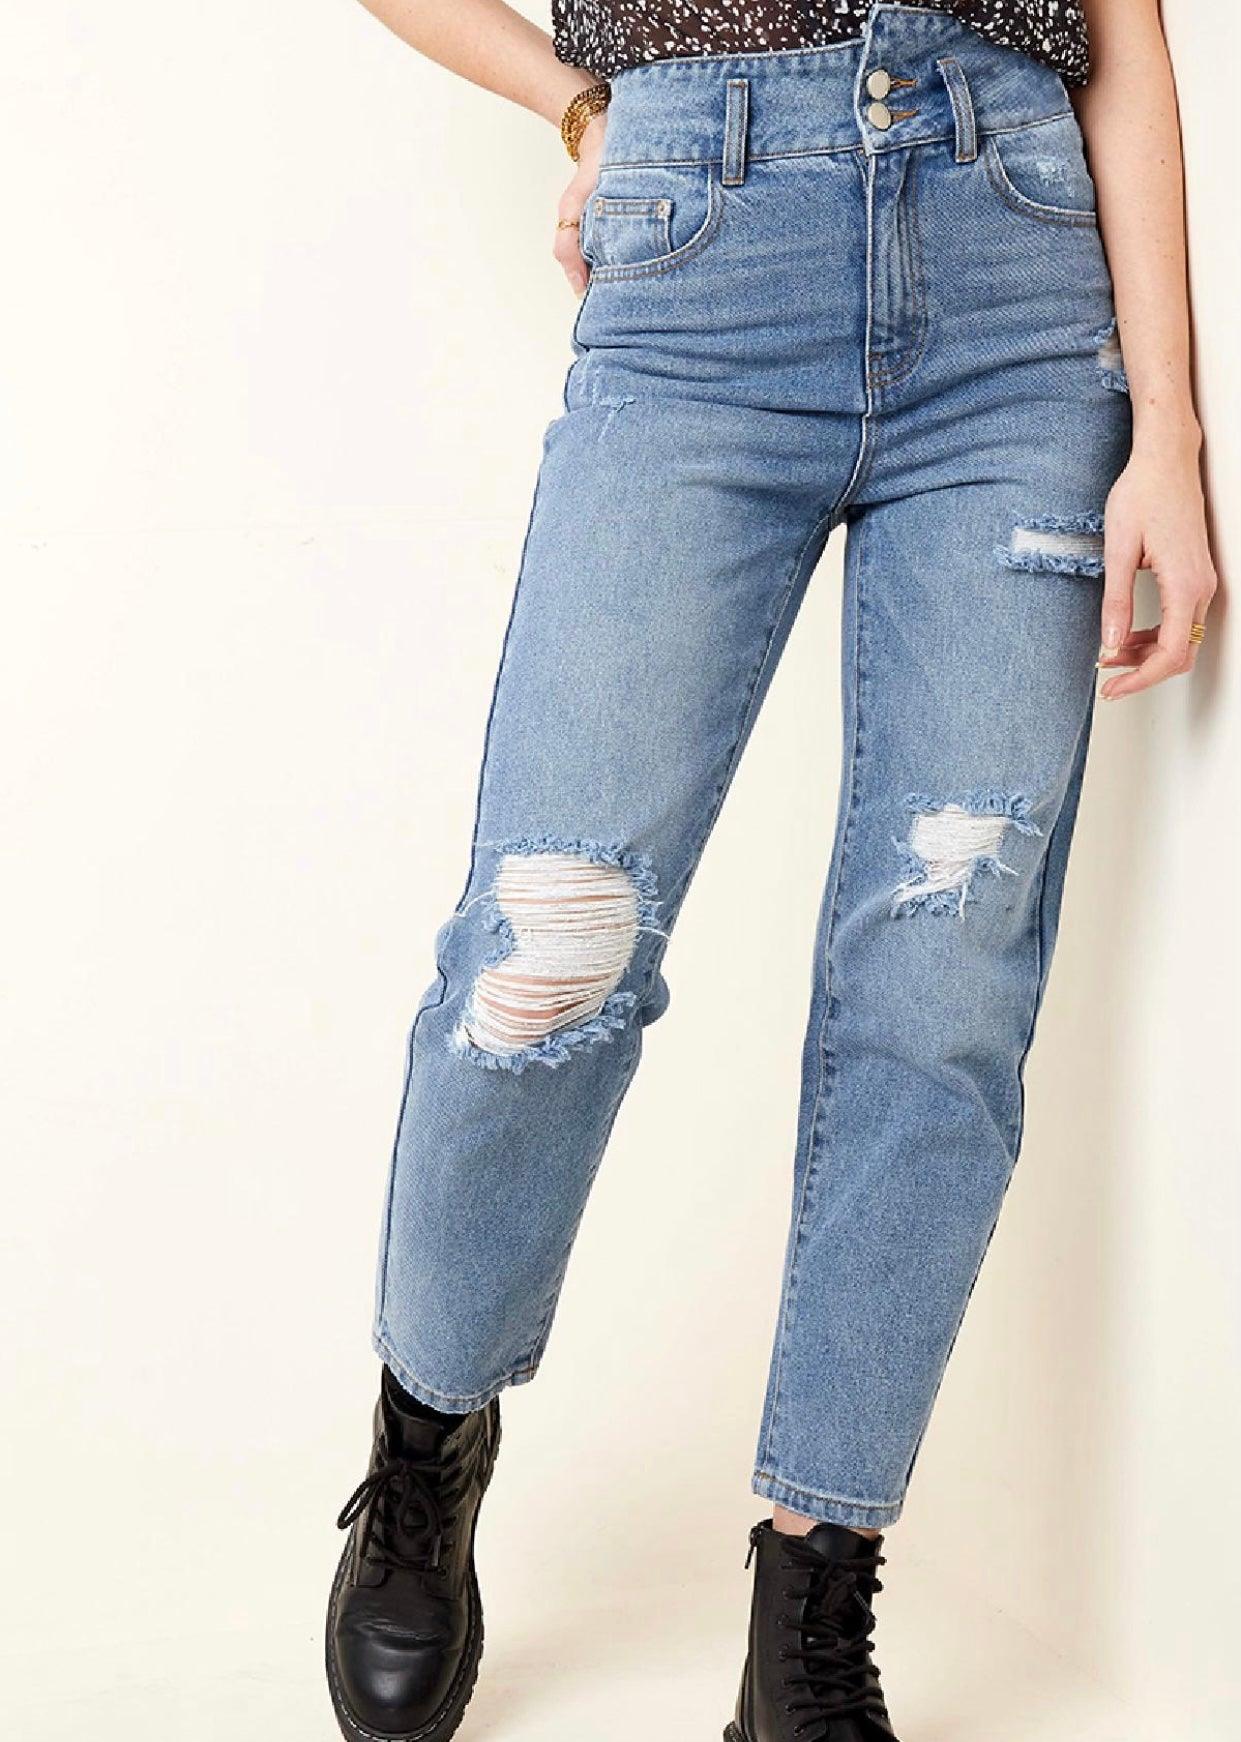 Enkellange versleten jeans met hoge taille - Amazing wardrobe